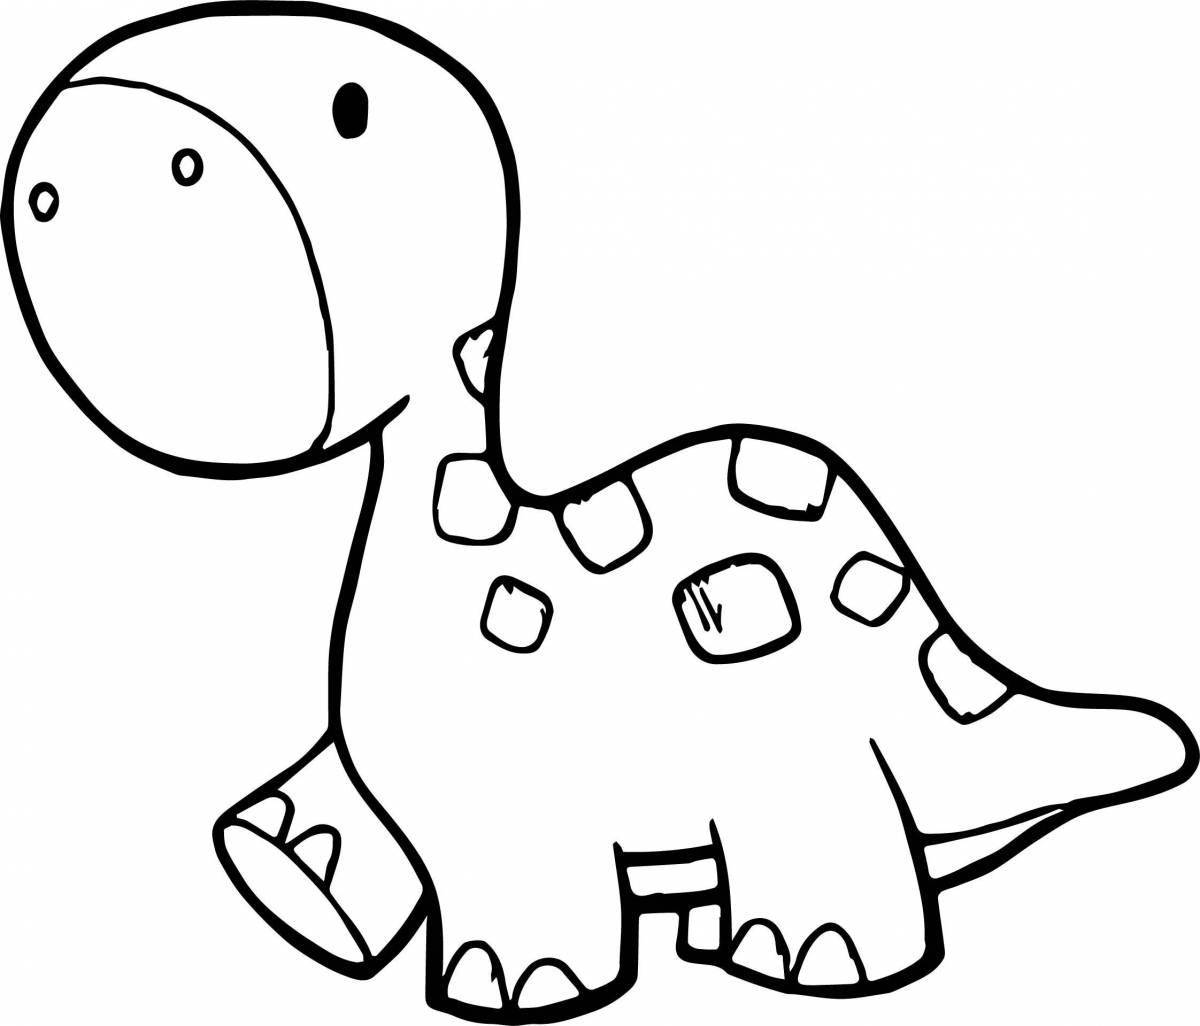 Adorable cute dinosaur coloring page